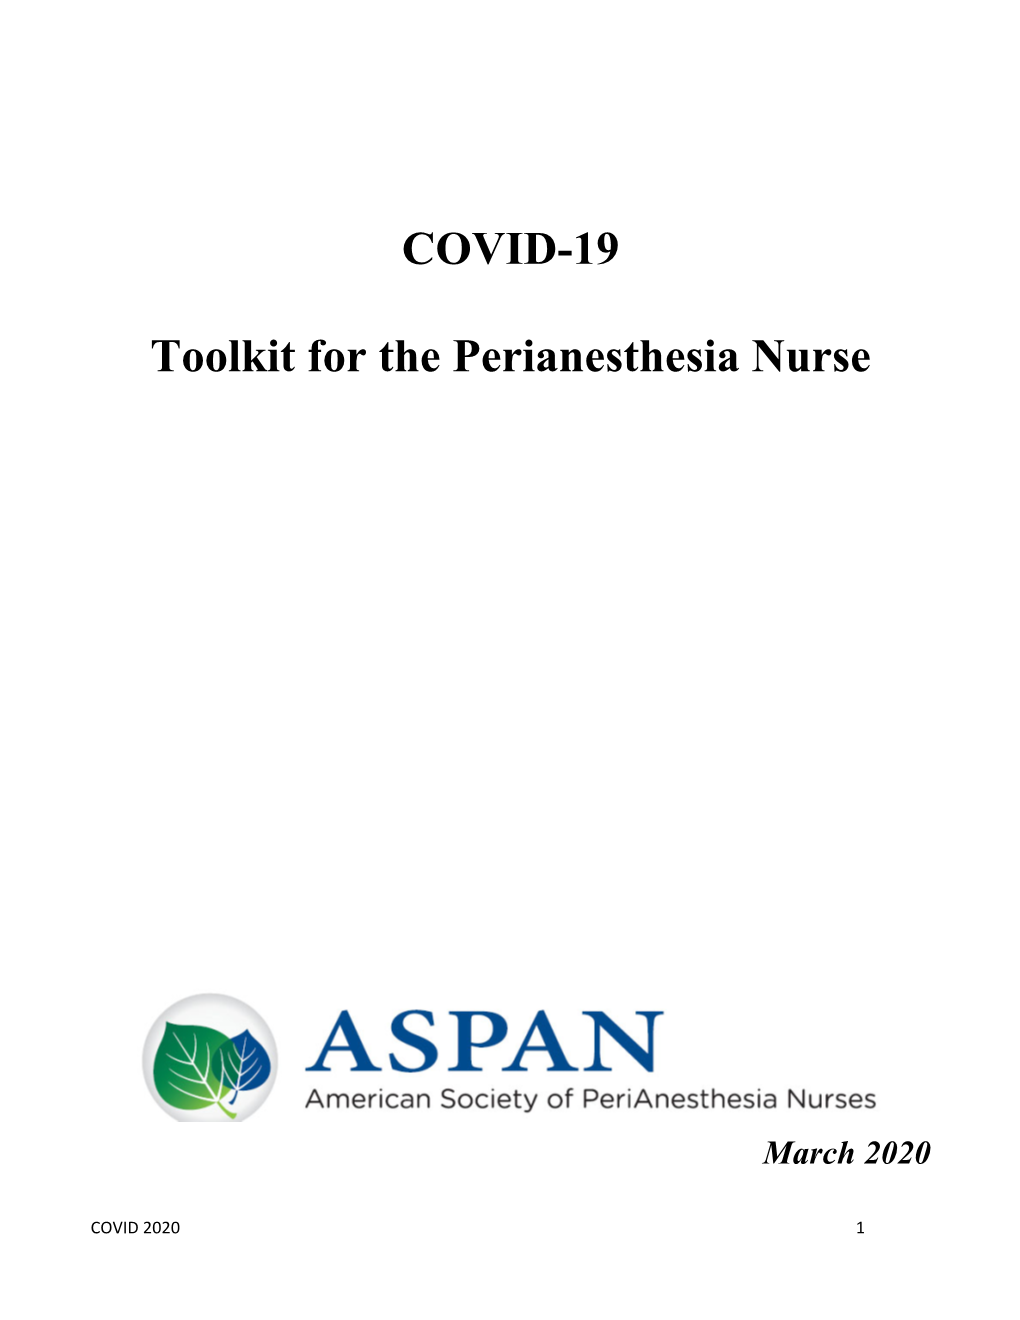 COVID-19 Toolkit for the Perianesthesia Nurse